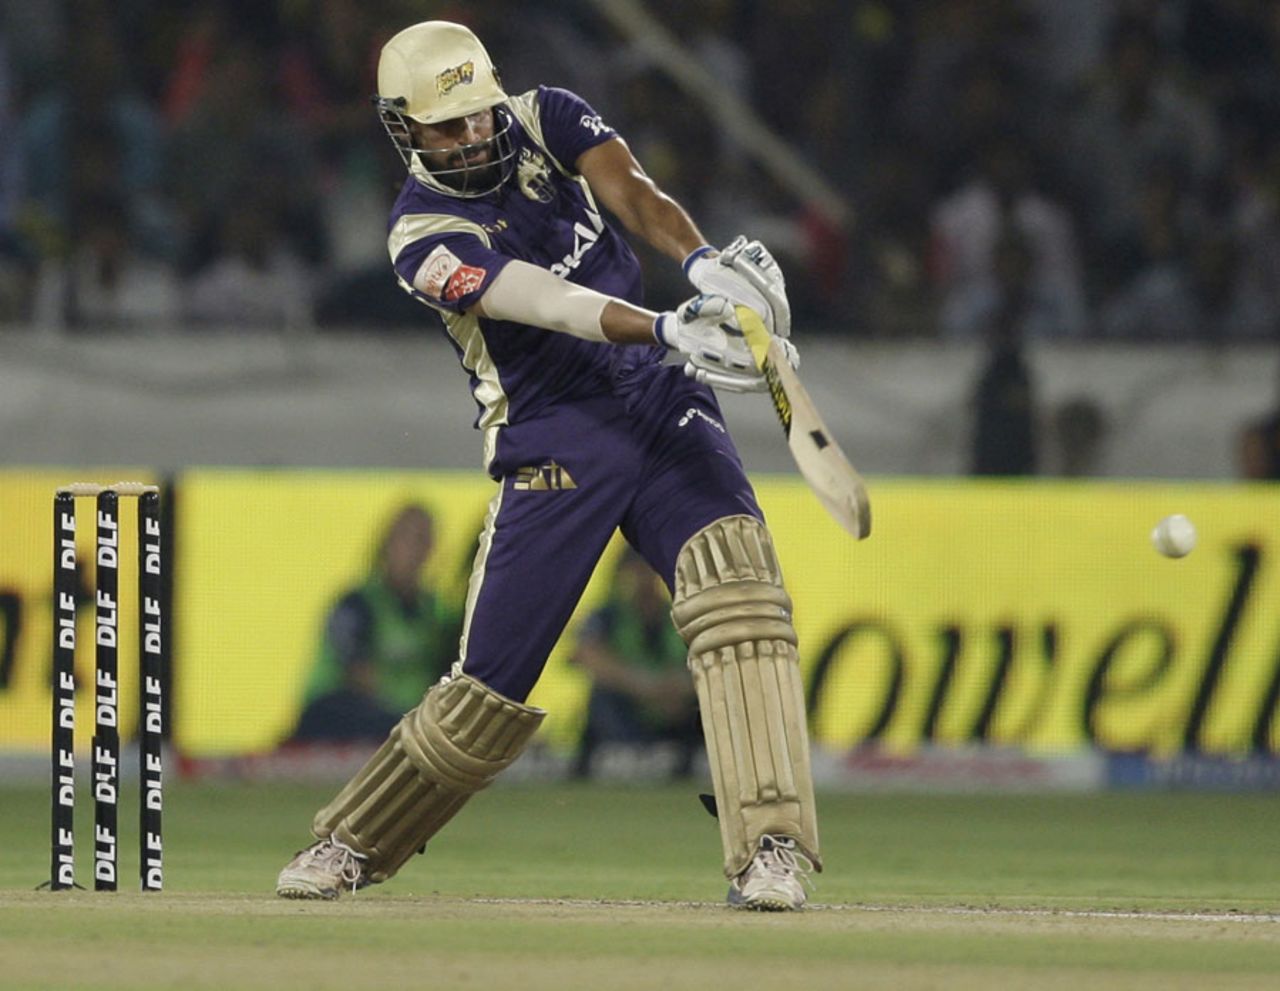 Yusuf Pathan powers one to the boundary, Deccan Chargers v Kolkata Knight Riders, IPL 2011, Hyderabad, May 3, 2011